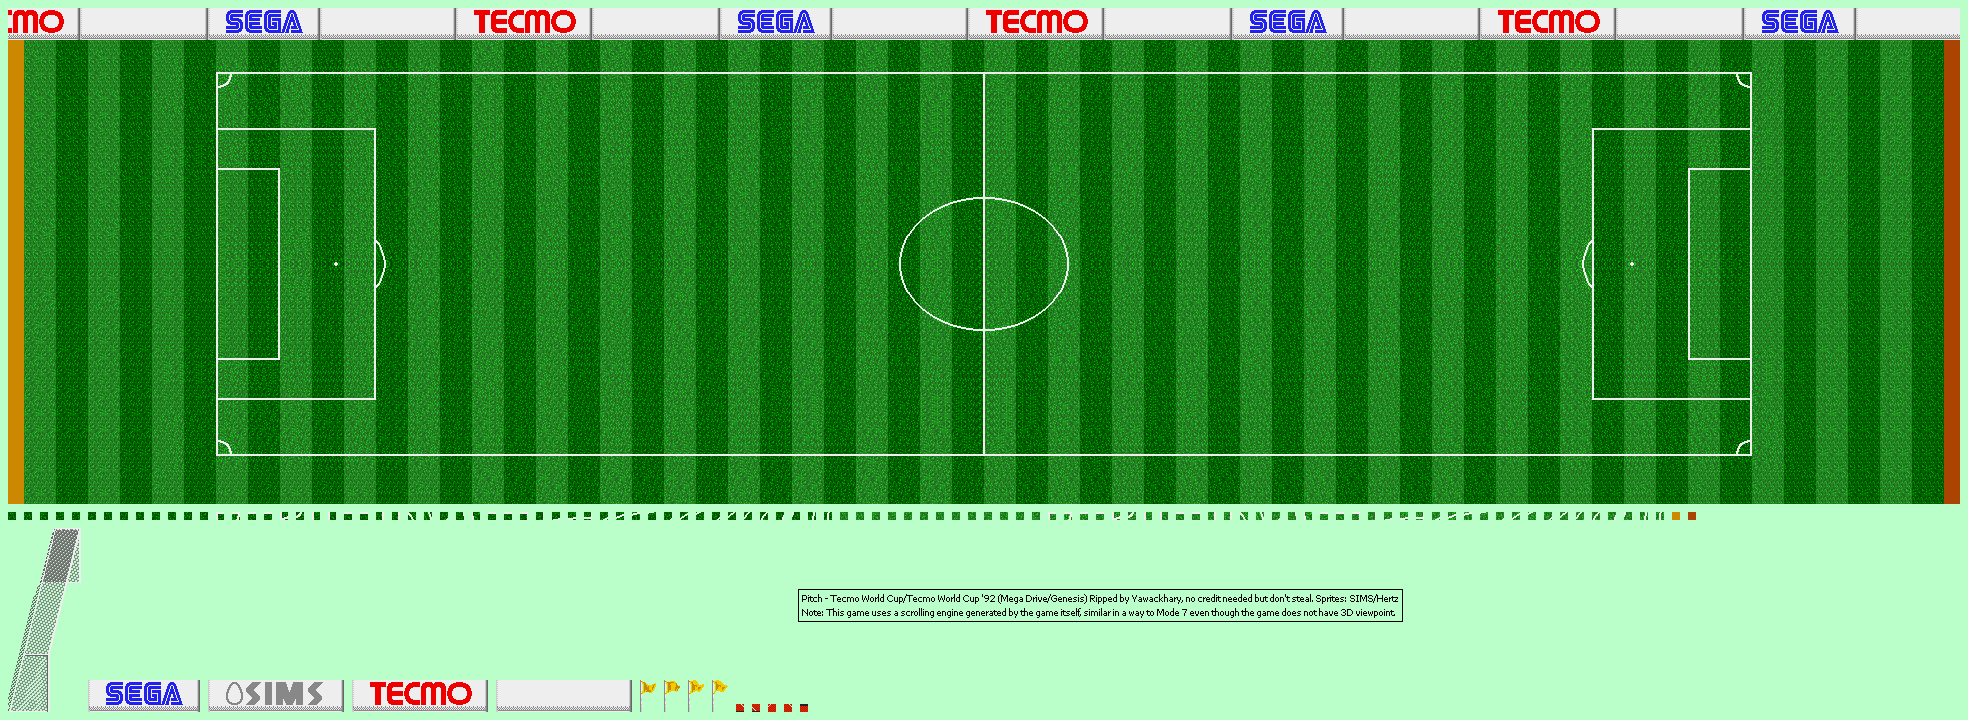 Tecmo World Cup / Tecmo World Cup '92 - Pitch